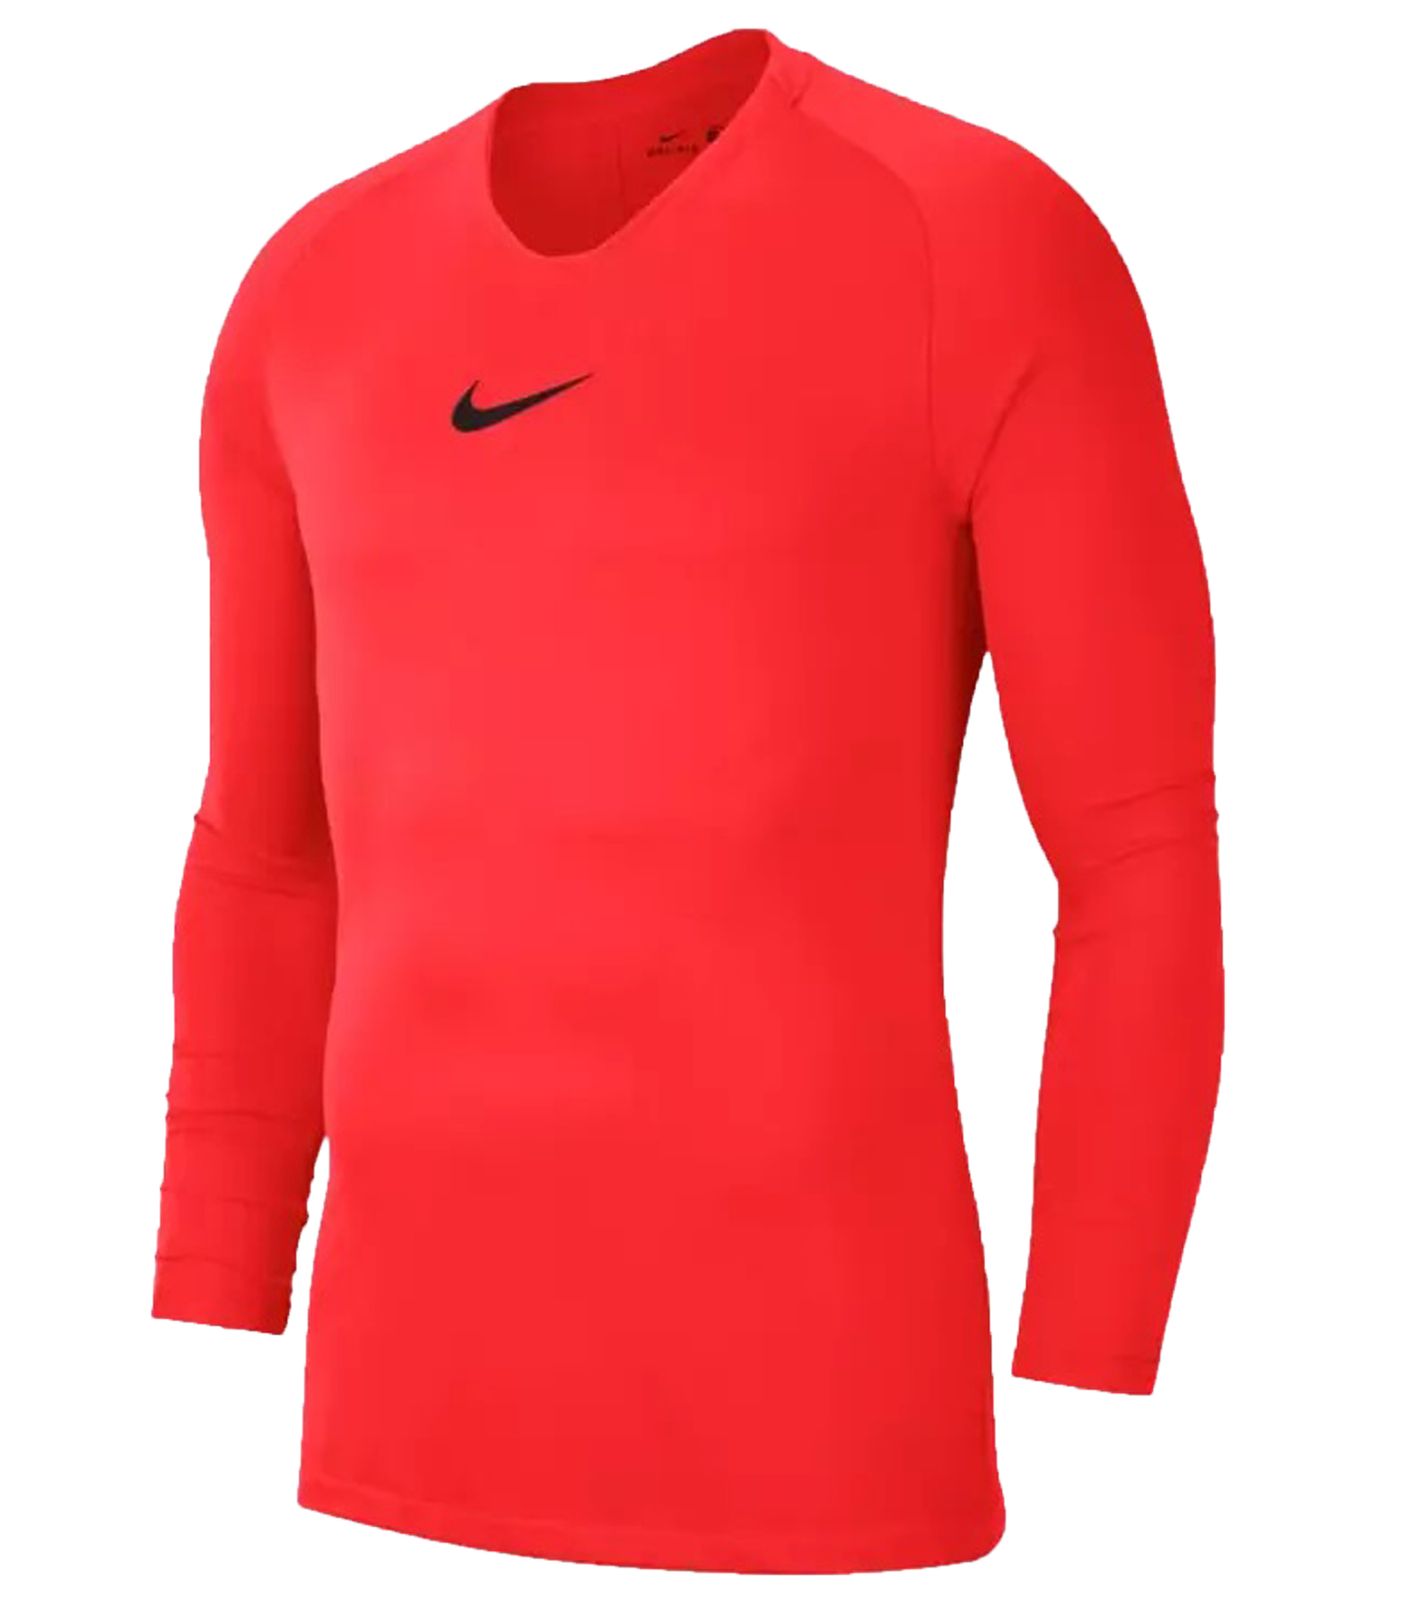 NIKE Performance Dry Park sportliches Langarm-Shirt mit Dry-Fit Technologie AV2609-635 Rot von NIKE